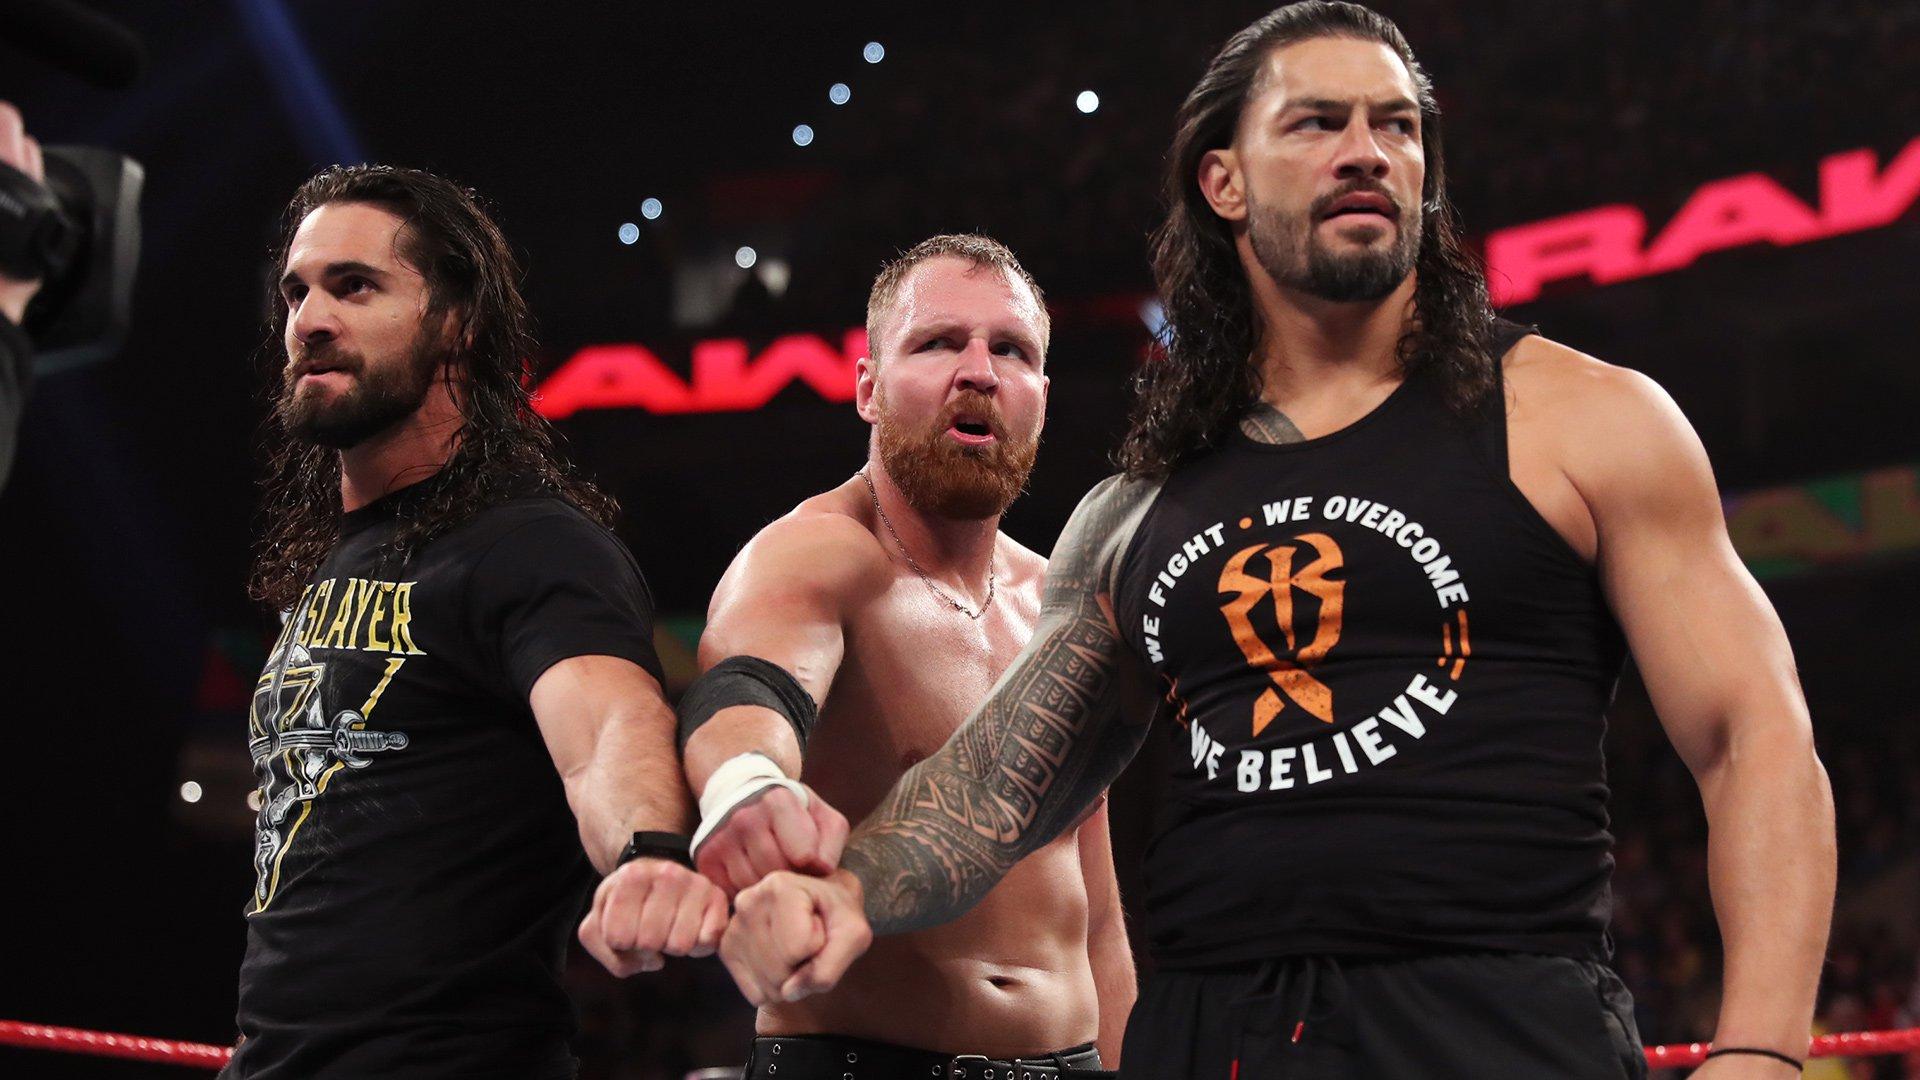 Roman Reigns, Seth Rollins and Dean Ambrose reunite as The Shield